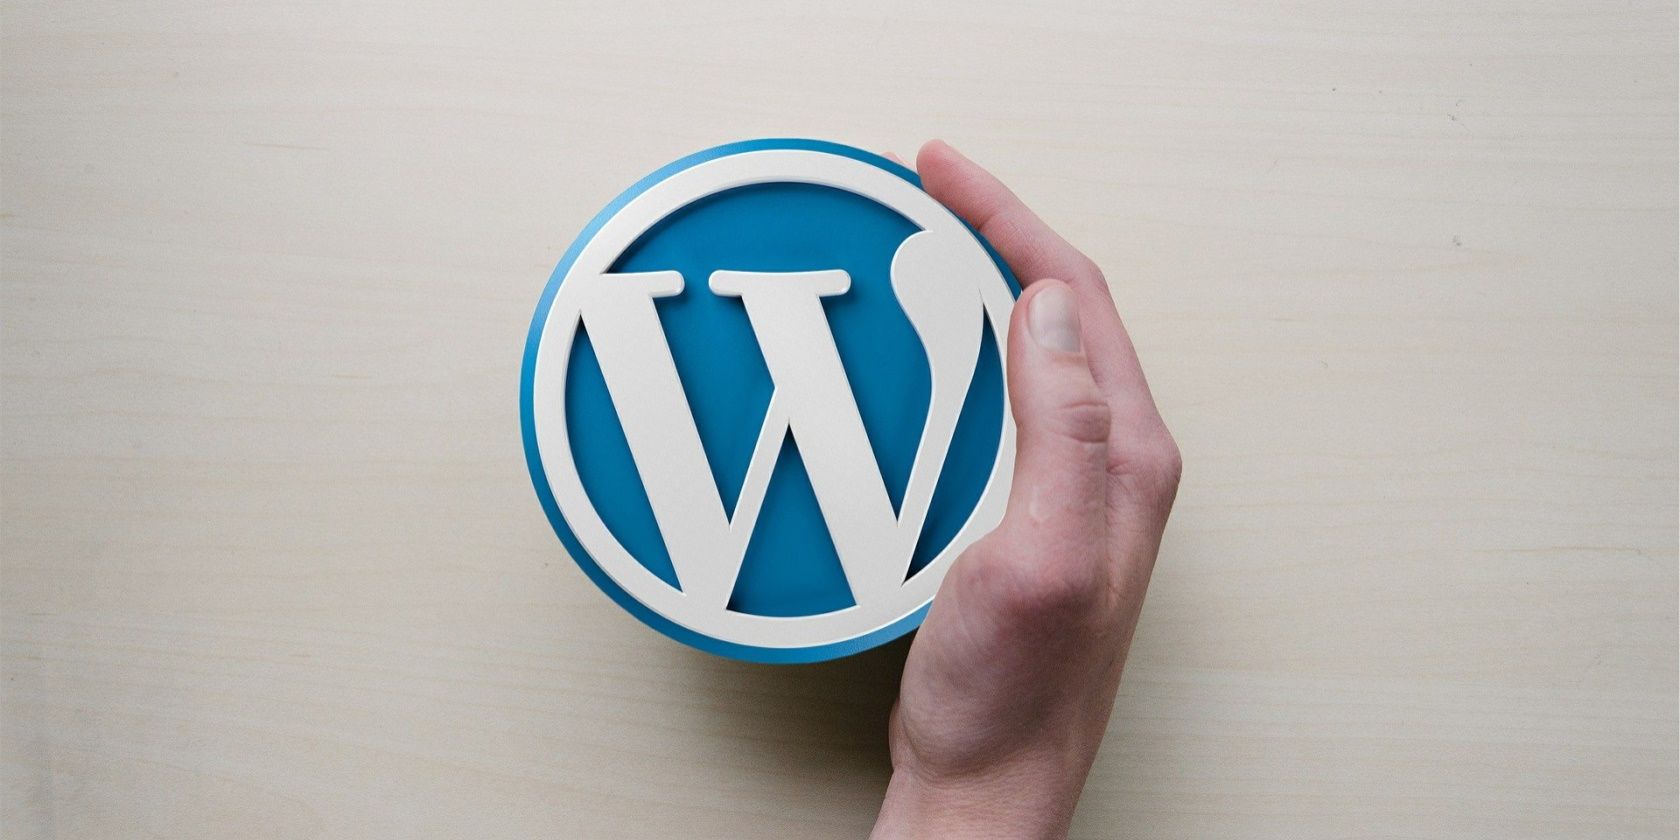 A hand cups the WordPress logo